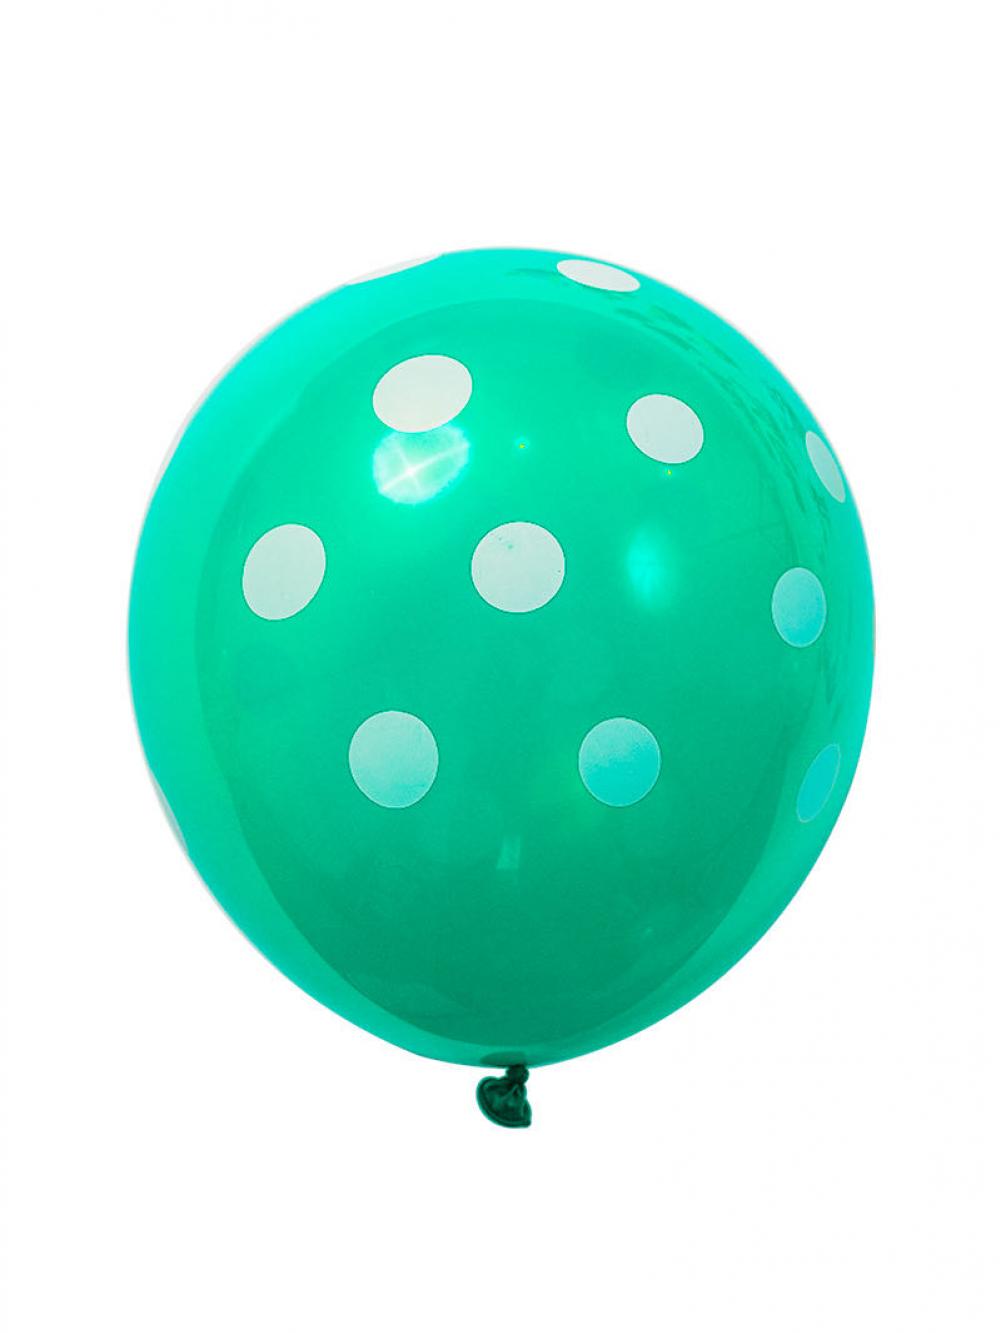 12 Inch Standard Polka Dot Balloons Tiffany Blue Balloon White Dot  (10PCS)